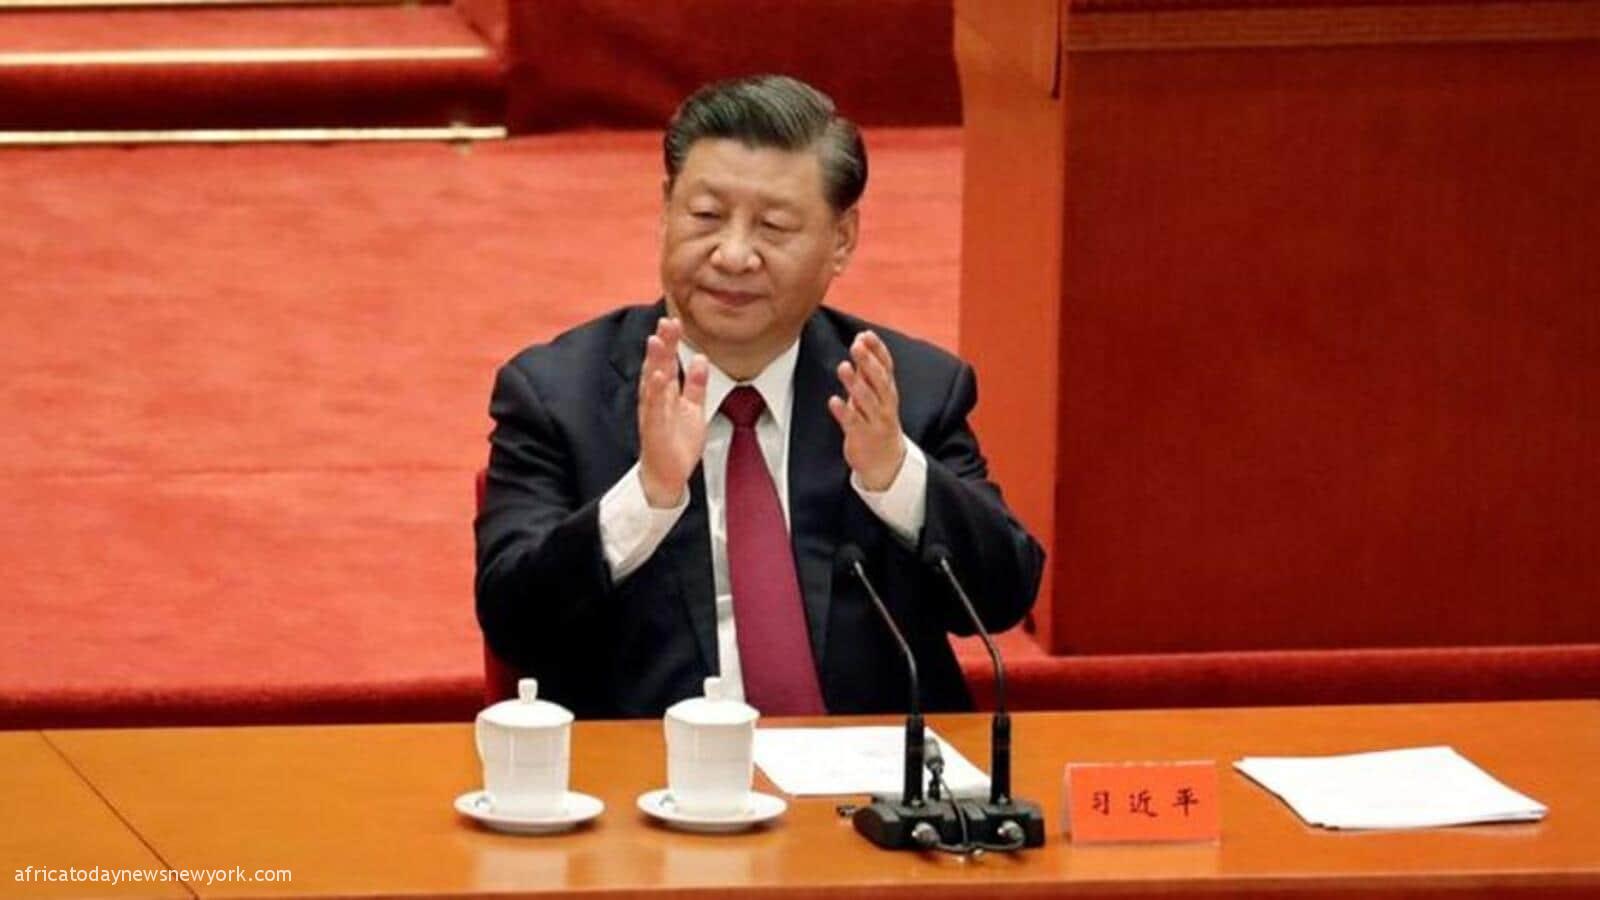 Hong Kong Lawmaker Tests Covid-19 Positive After Meeting Xi